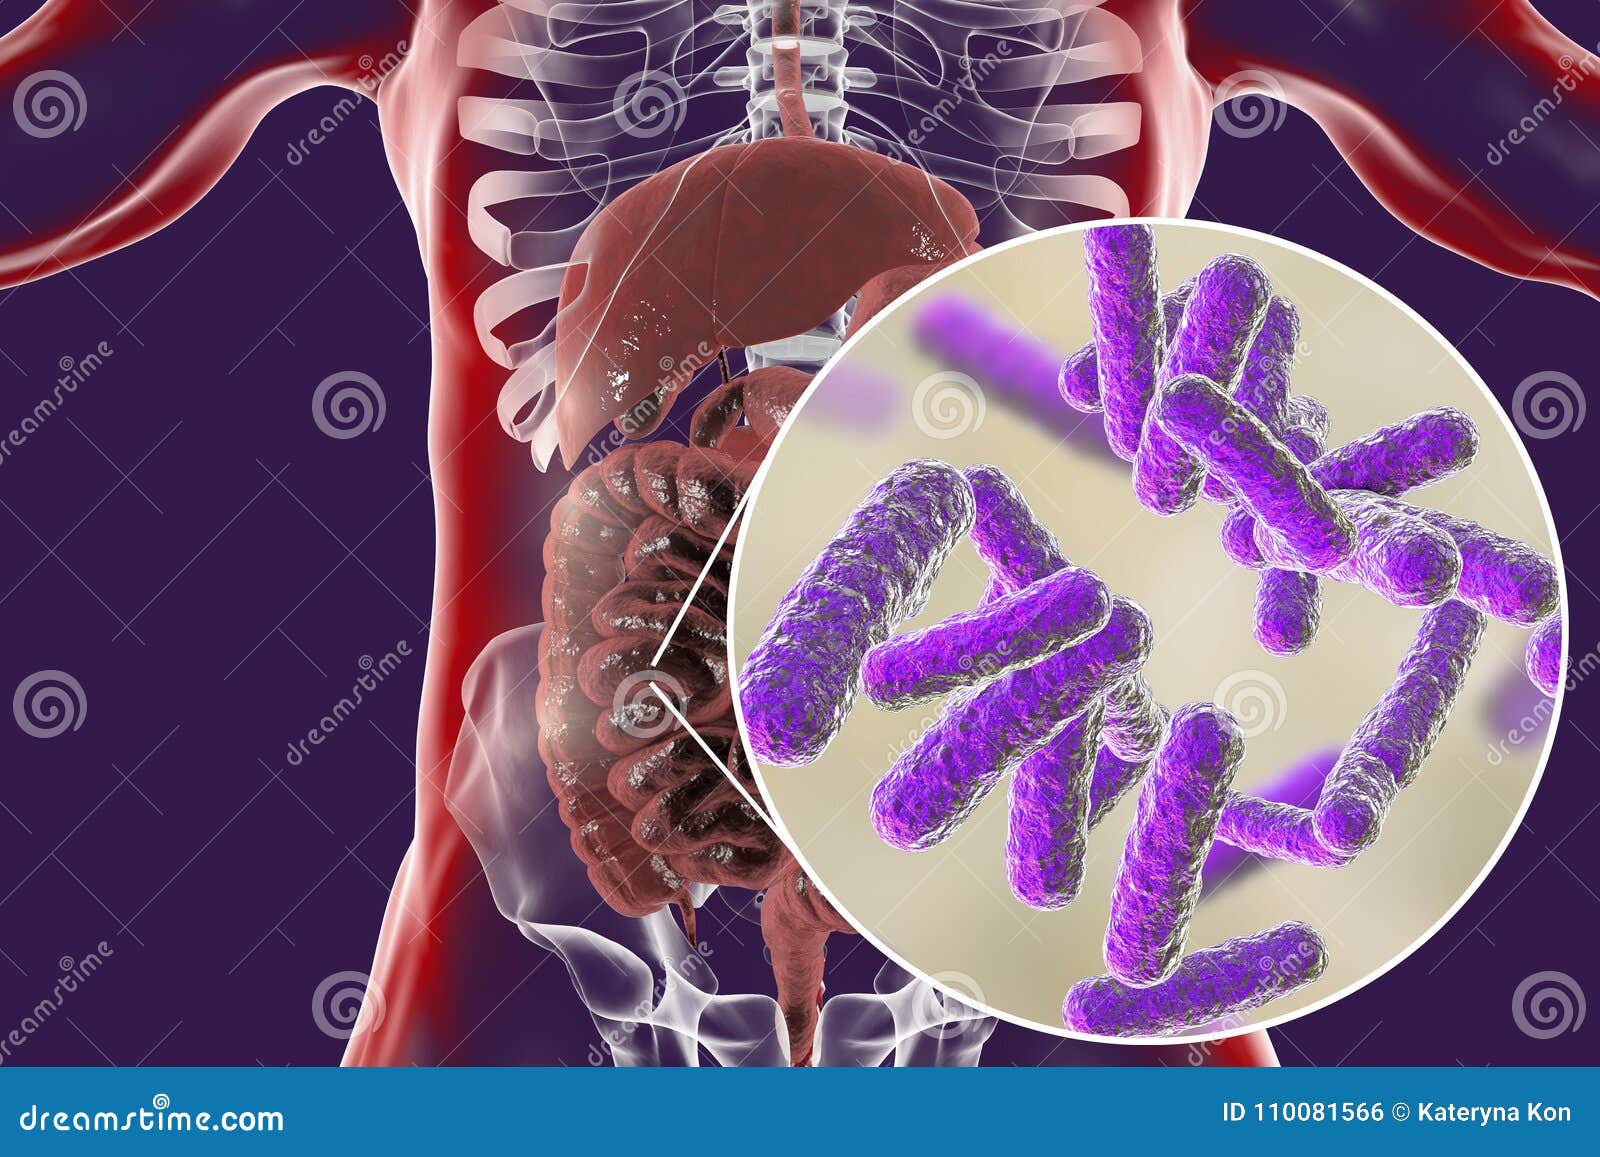 intestinal microbiome, close-up view of enteric bacteria